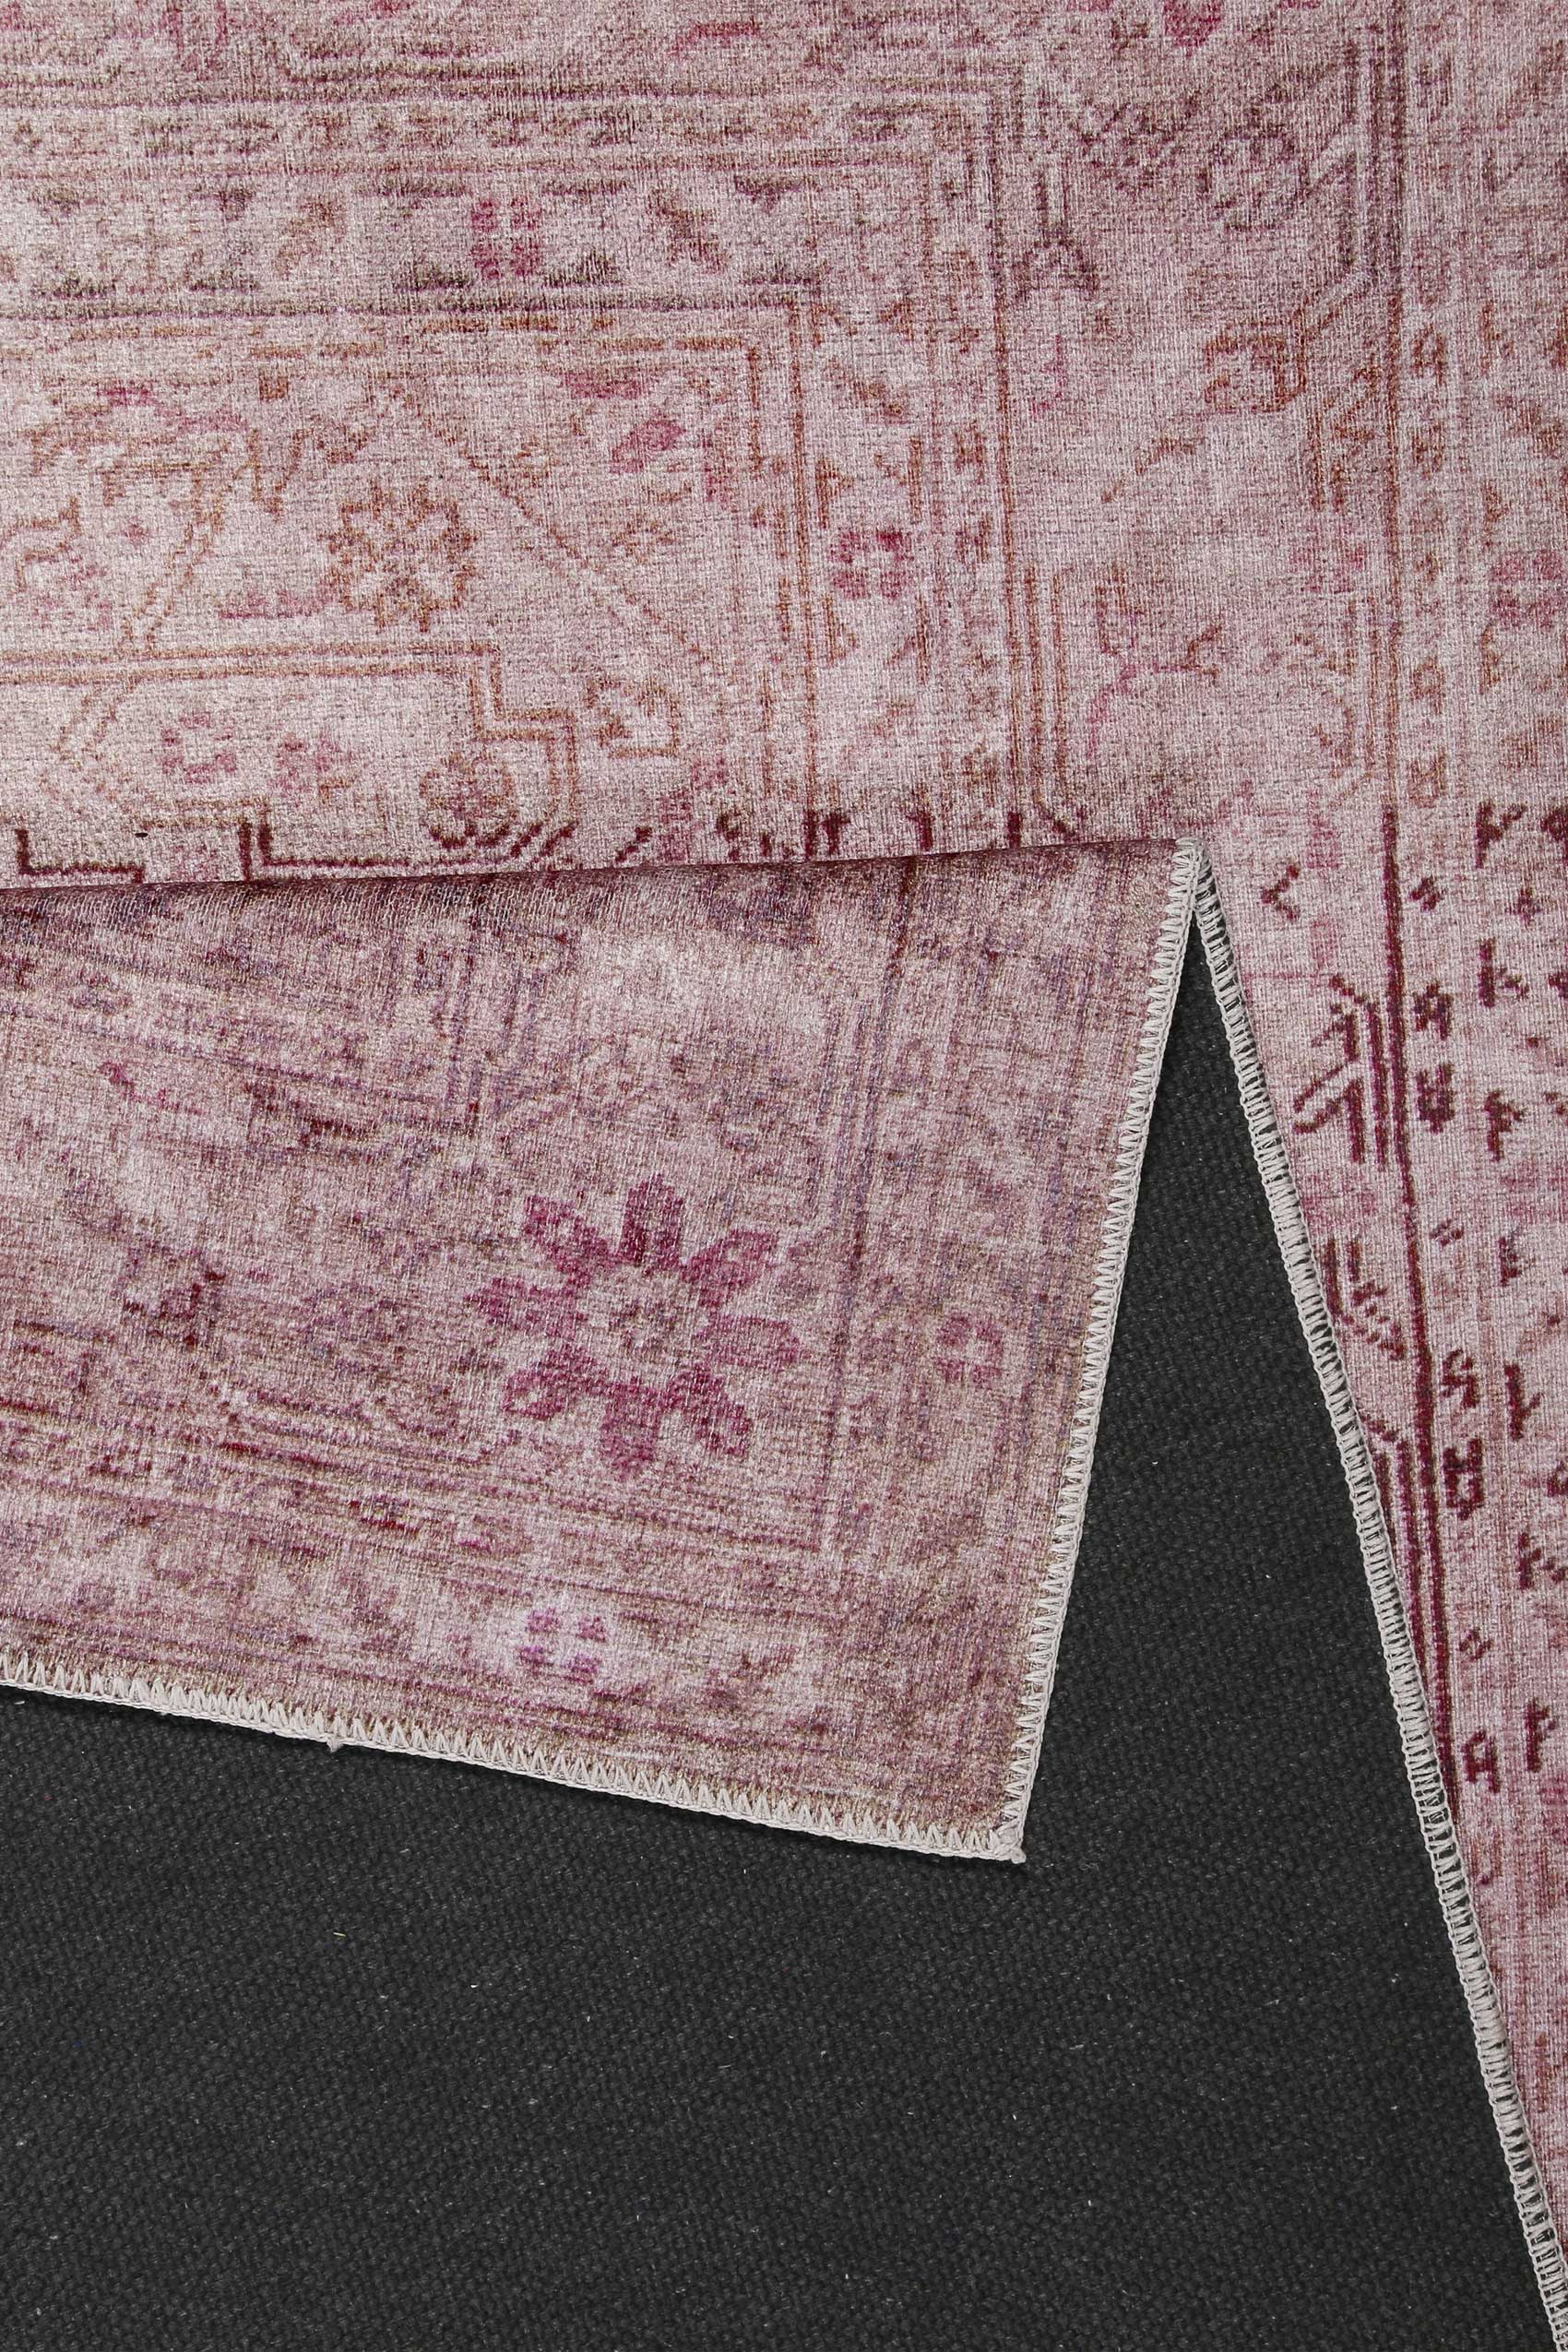 Vintage Teppich Grau Beige Rosa » Past Future « WECONhome - Ansicht 3